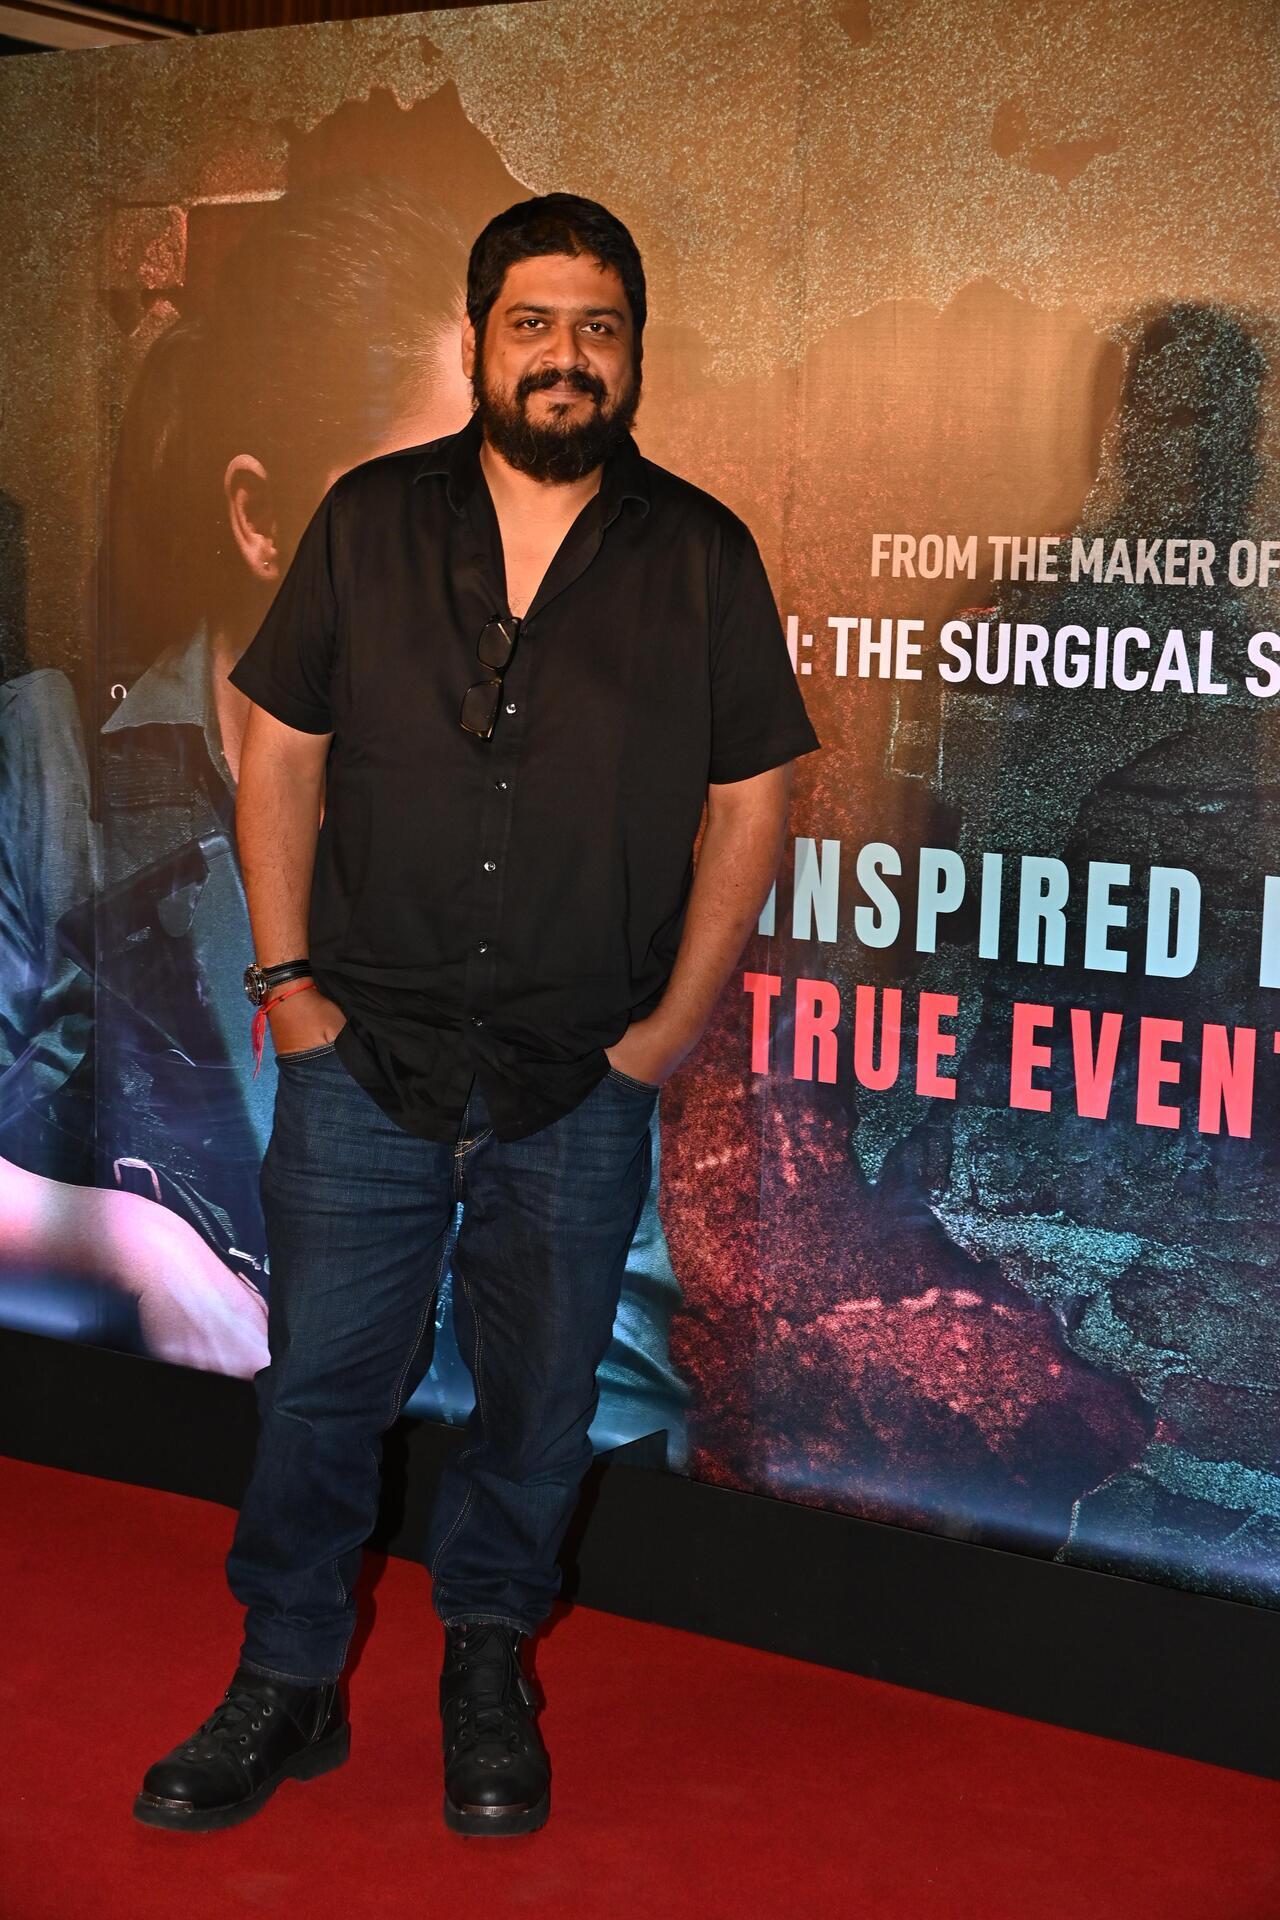 Adipurush director Om Raut was also present at the screening